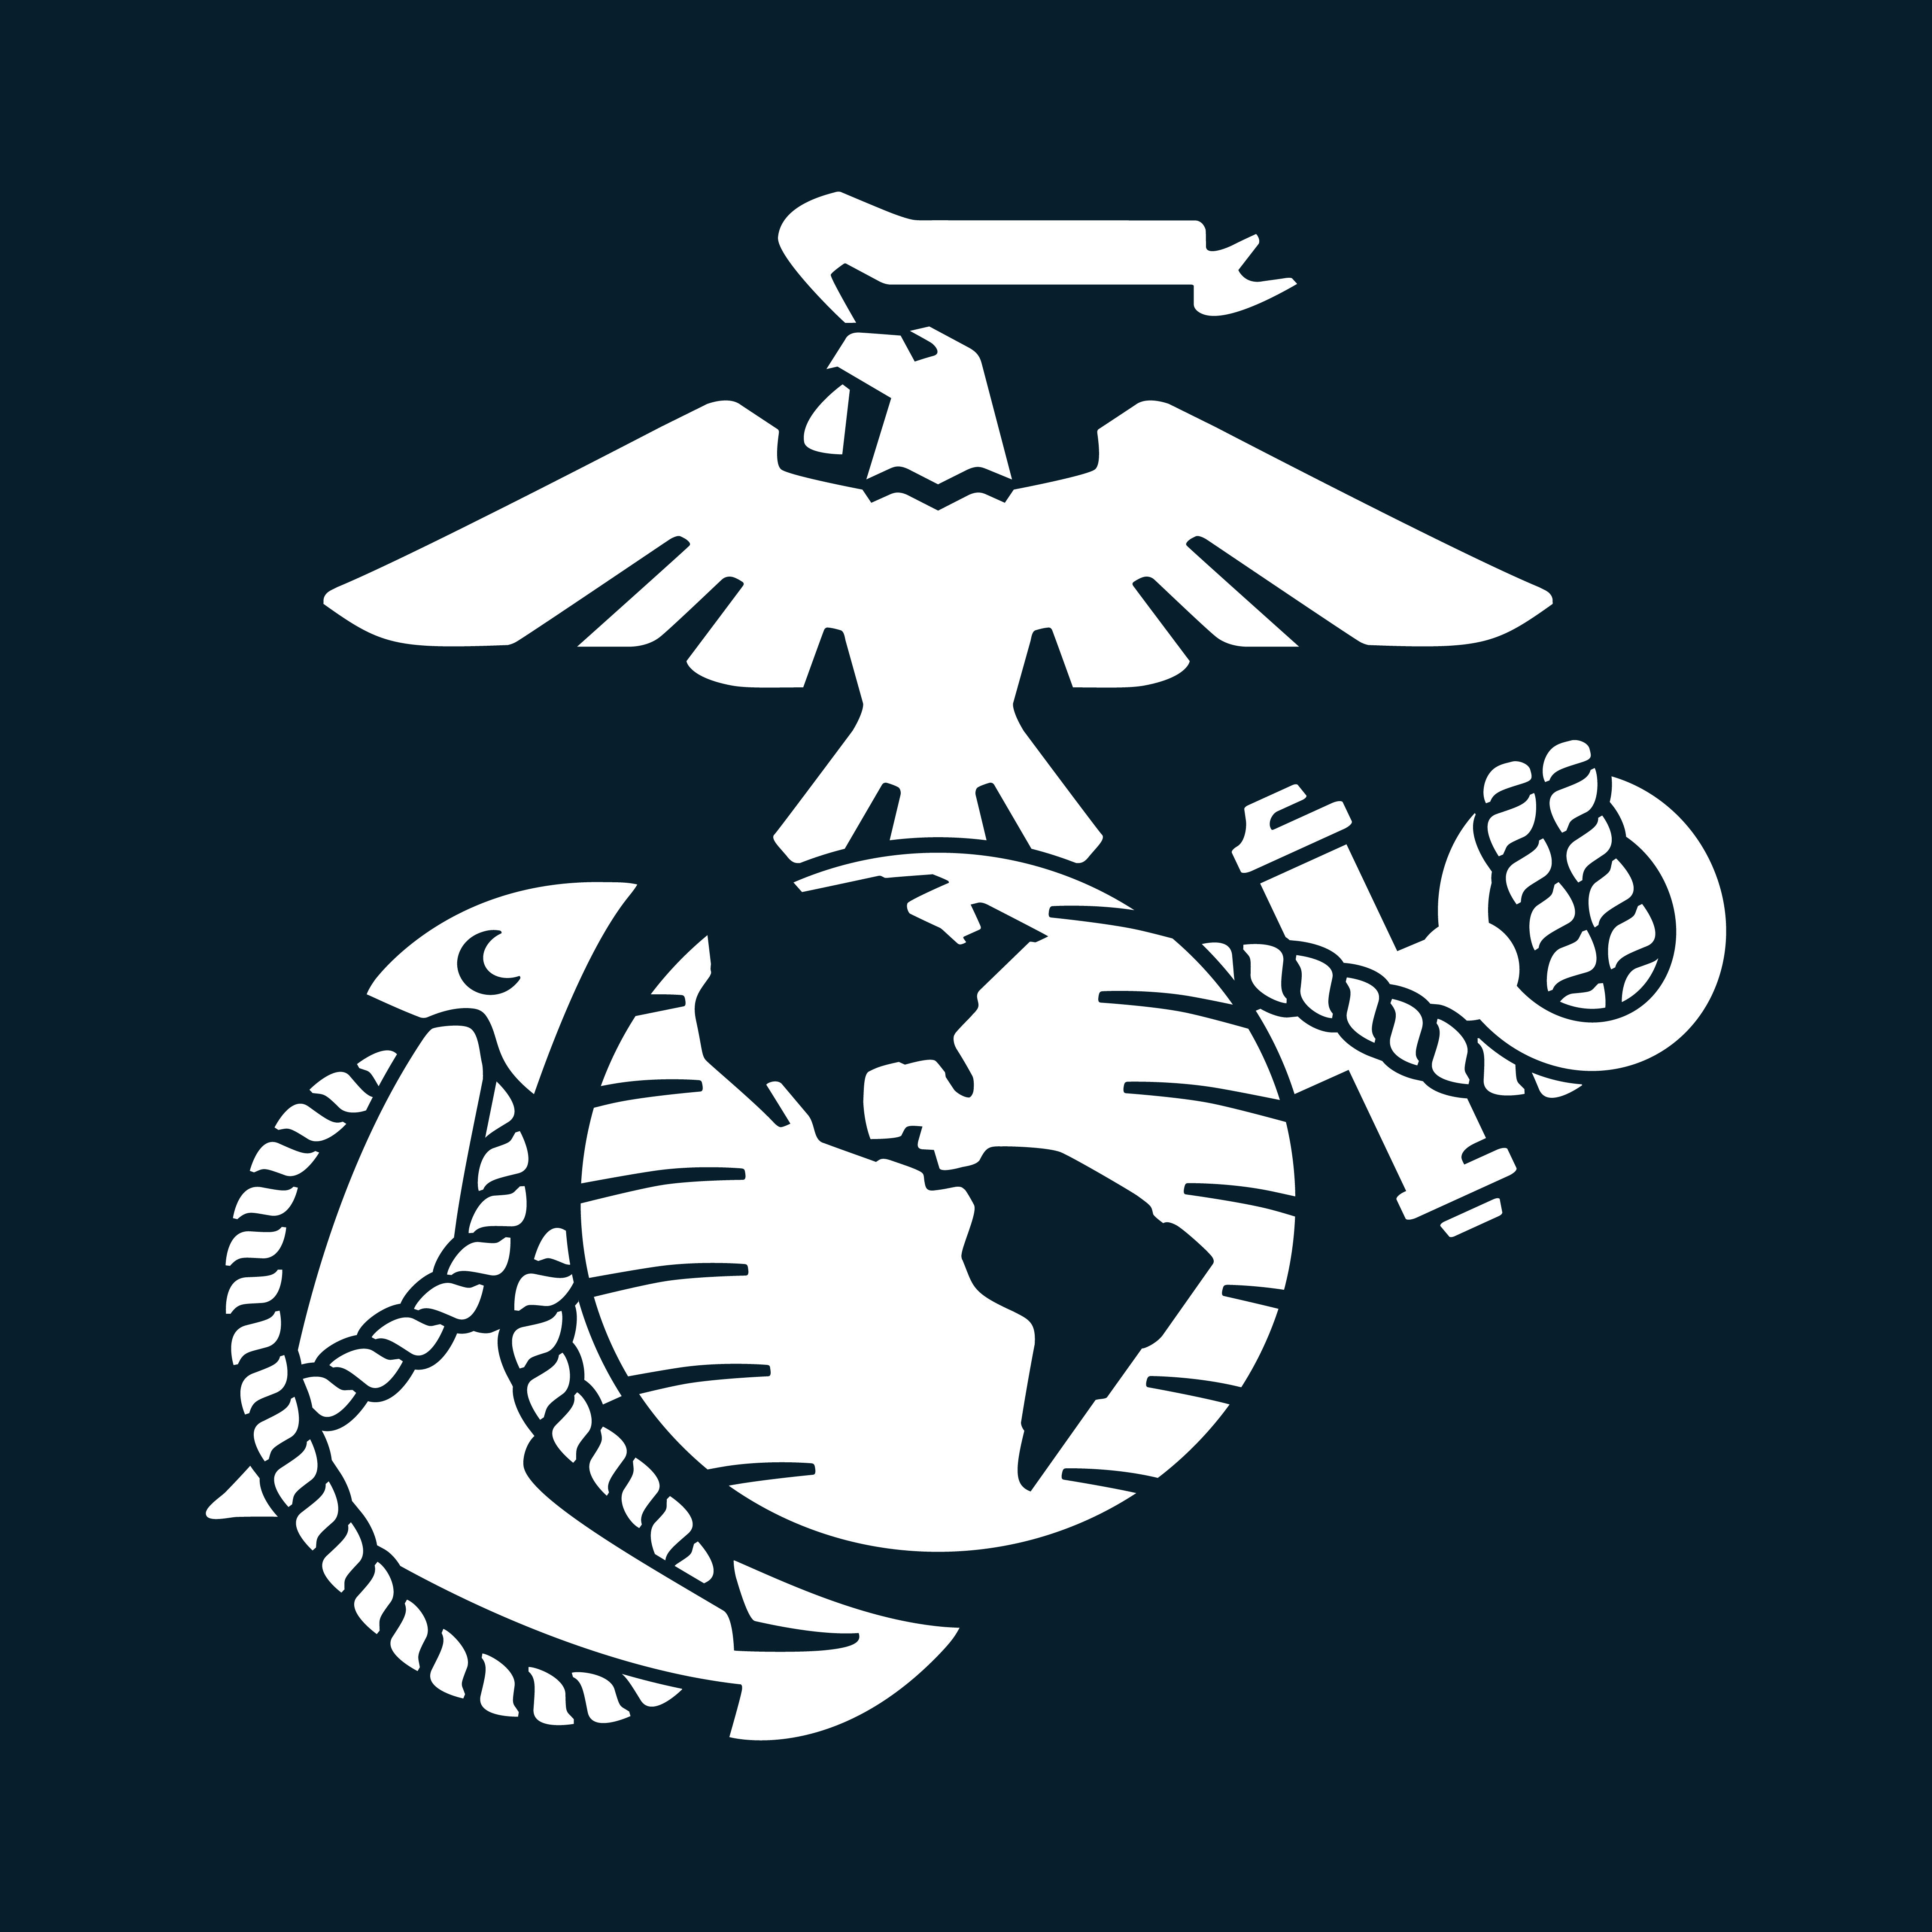 USMC RSS CAMP CREEK